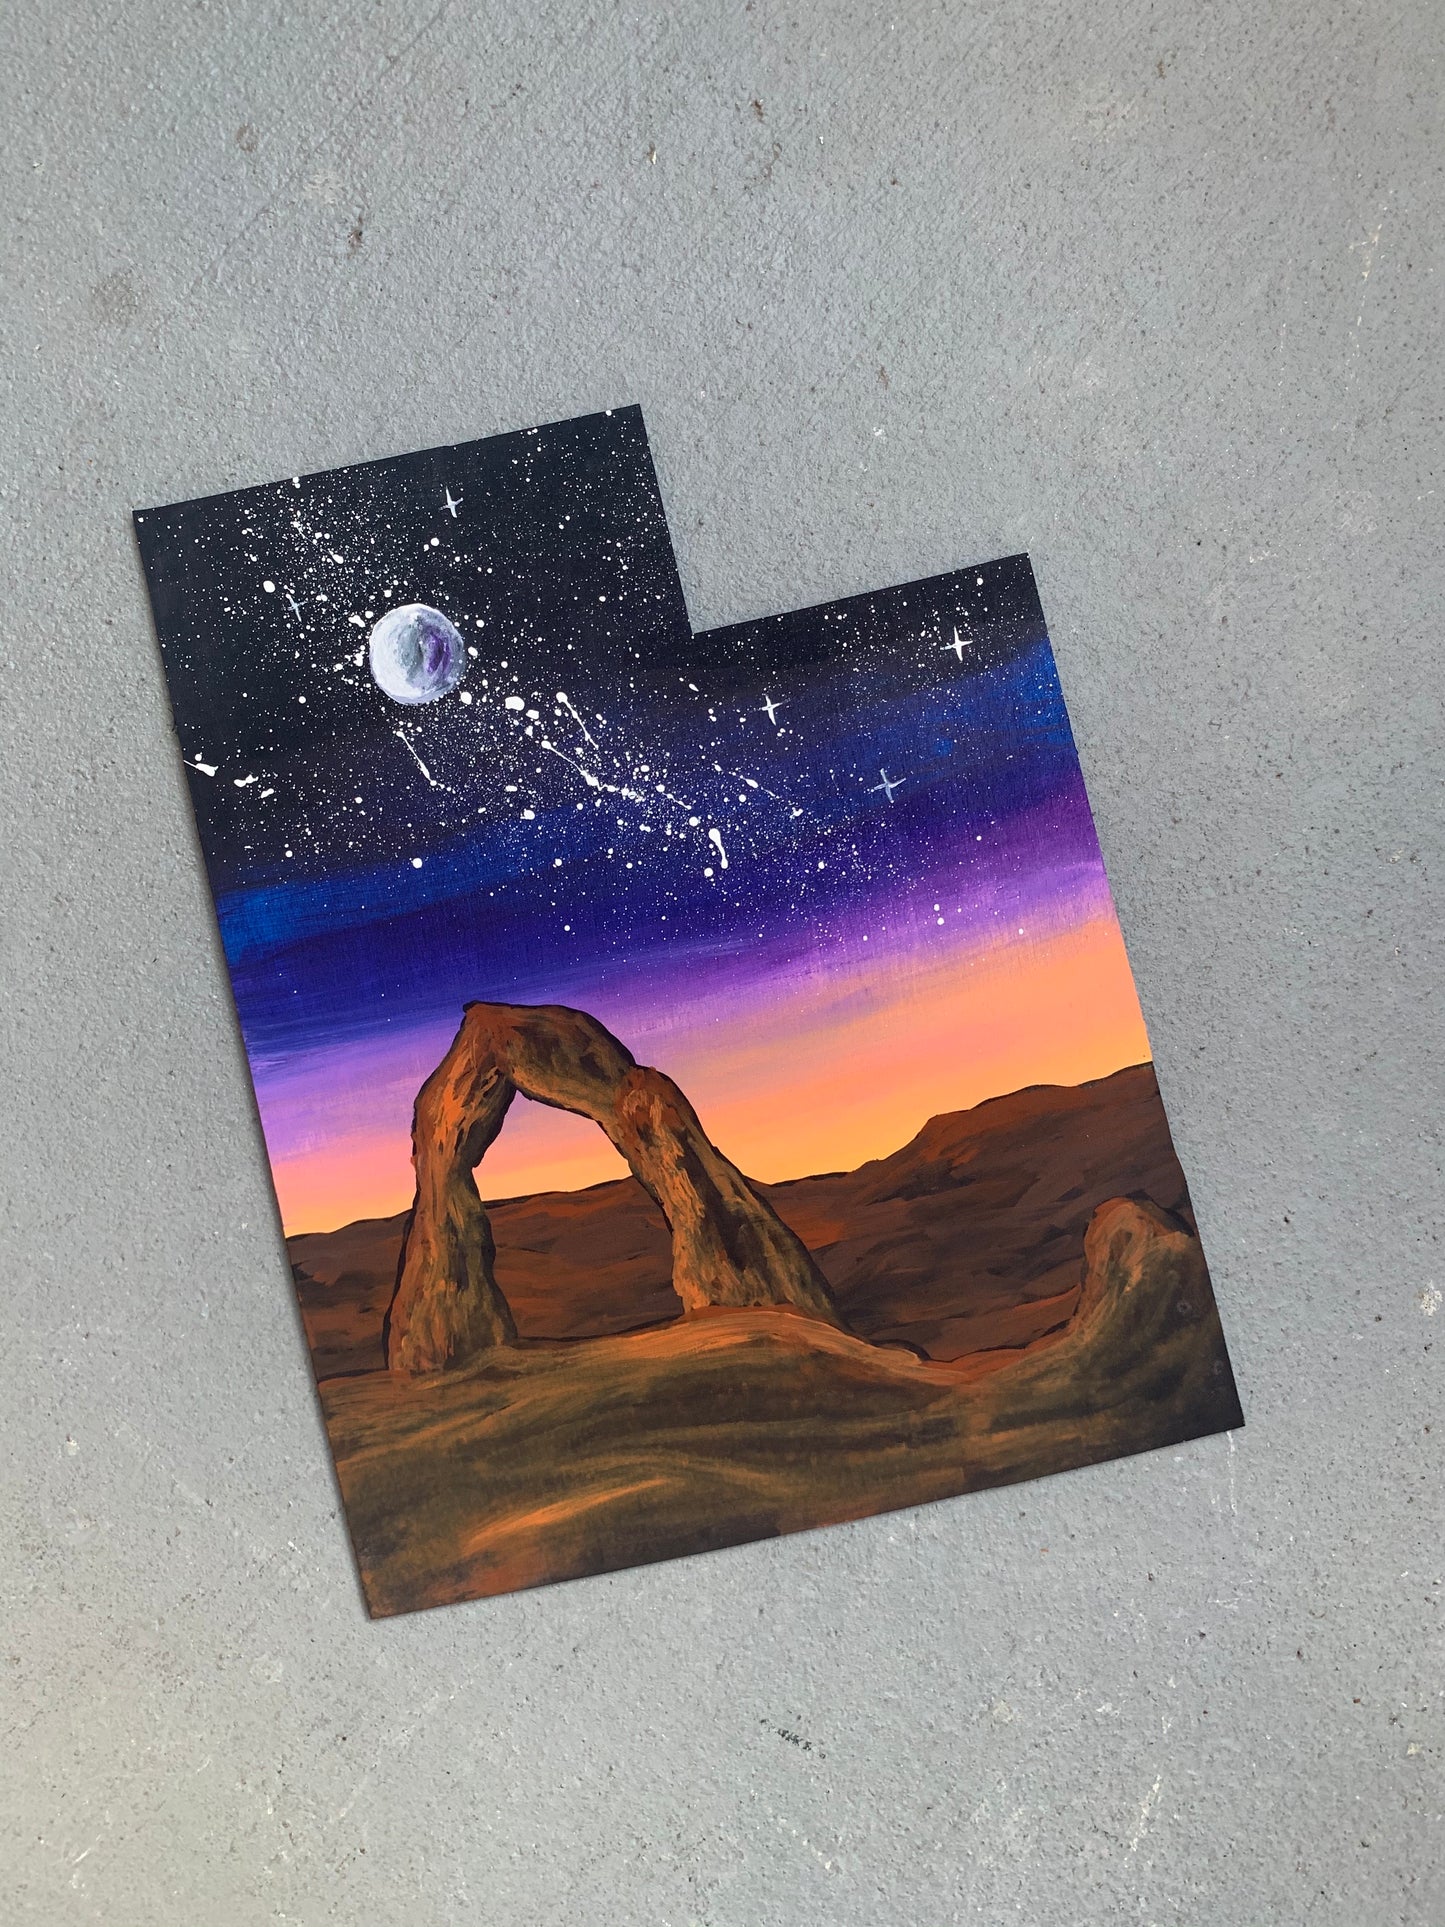 Utah desert delicate arch painting